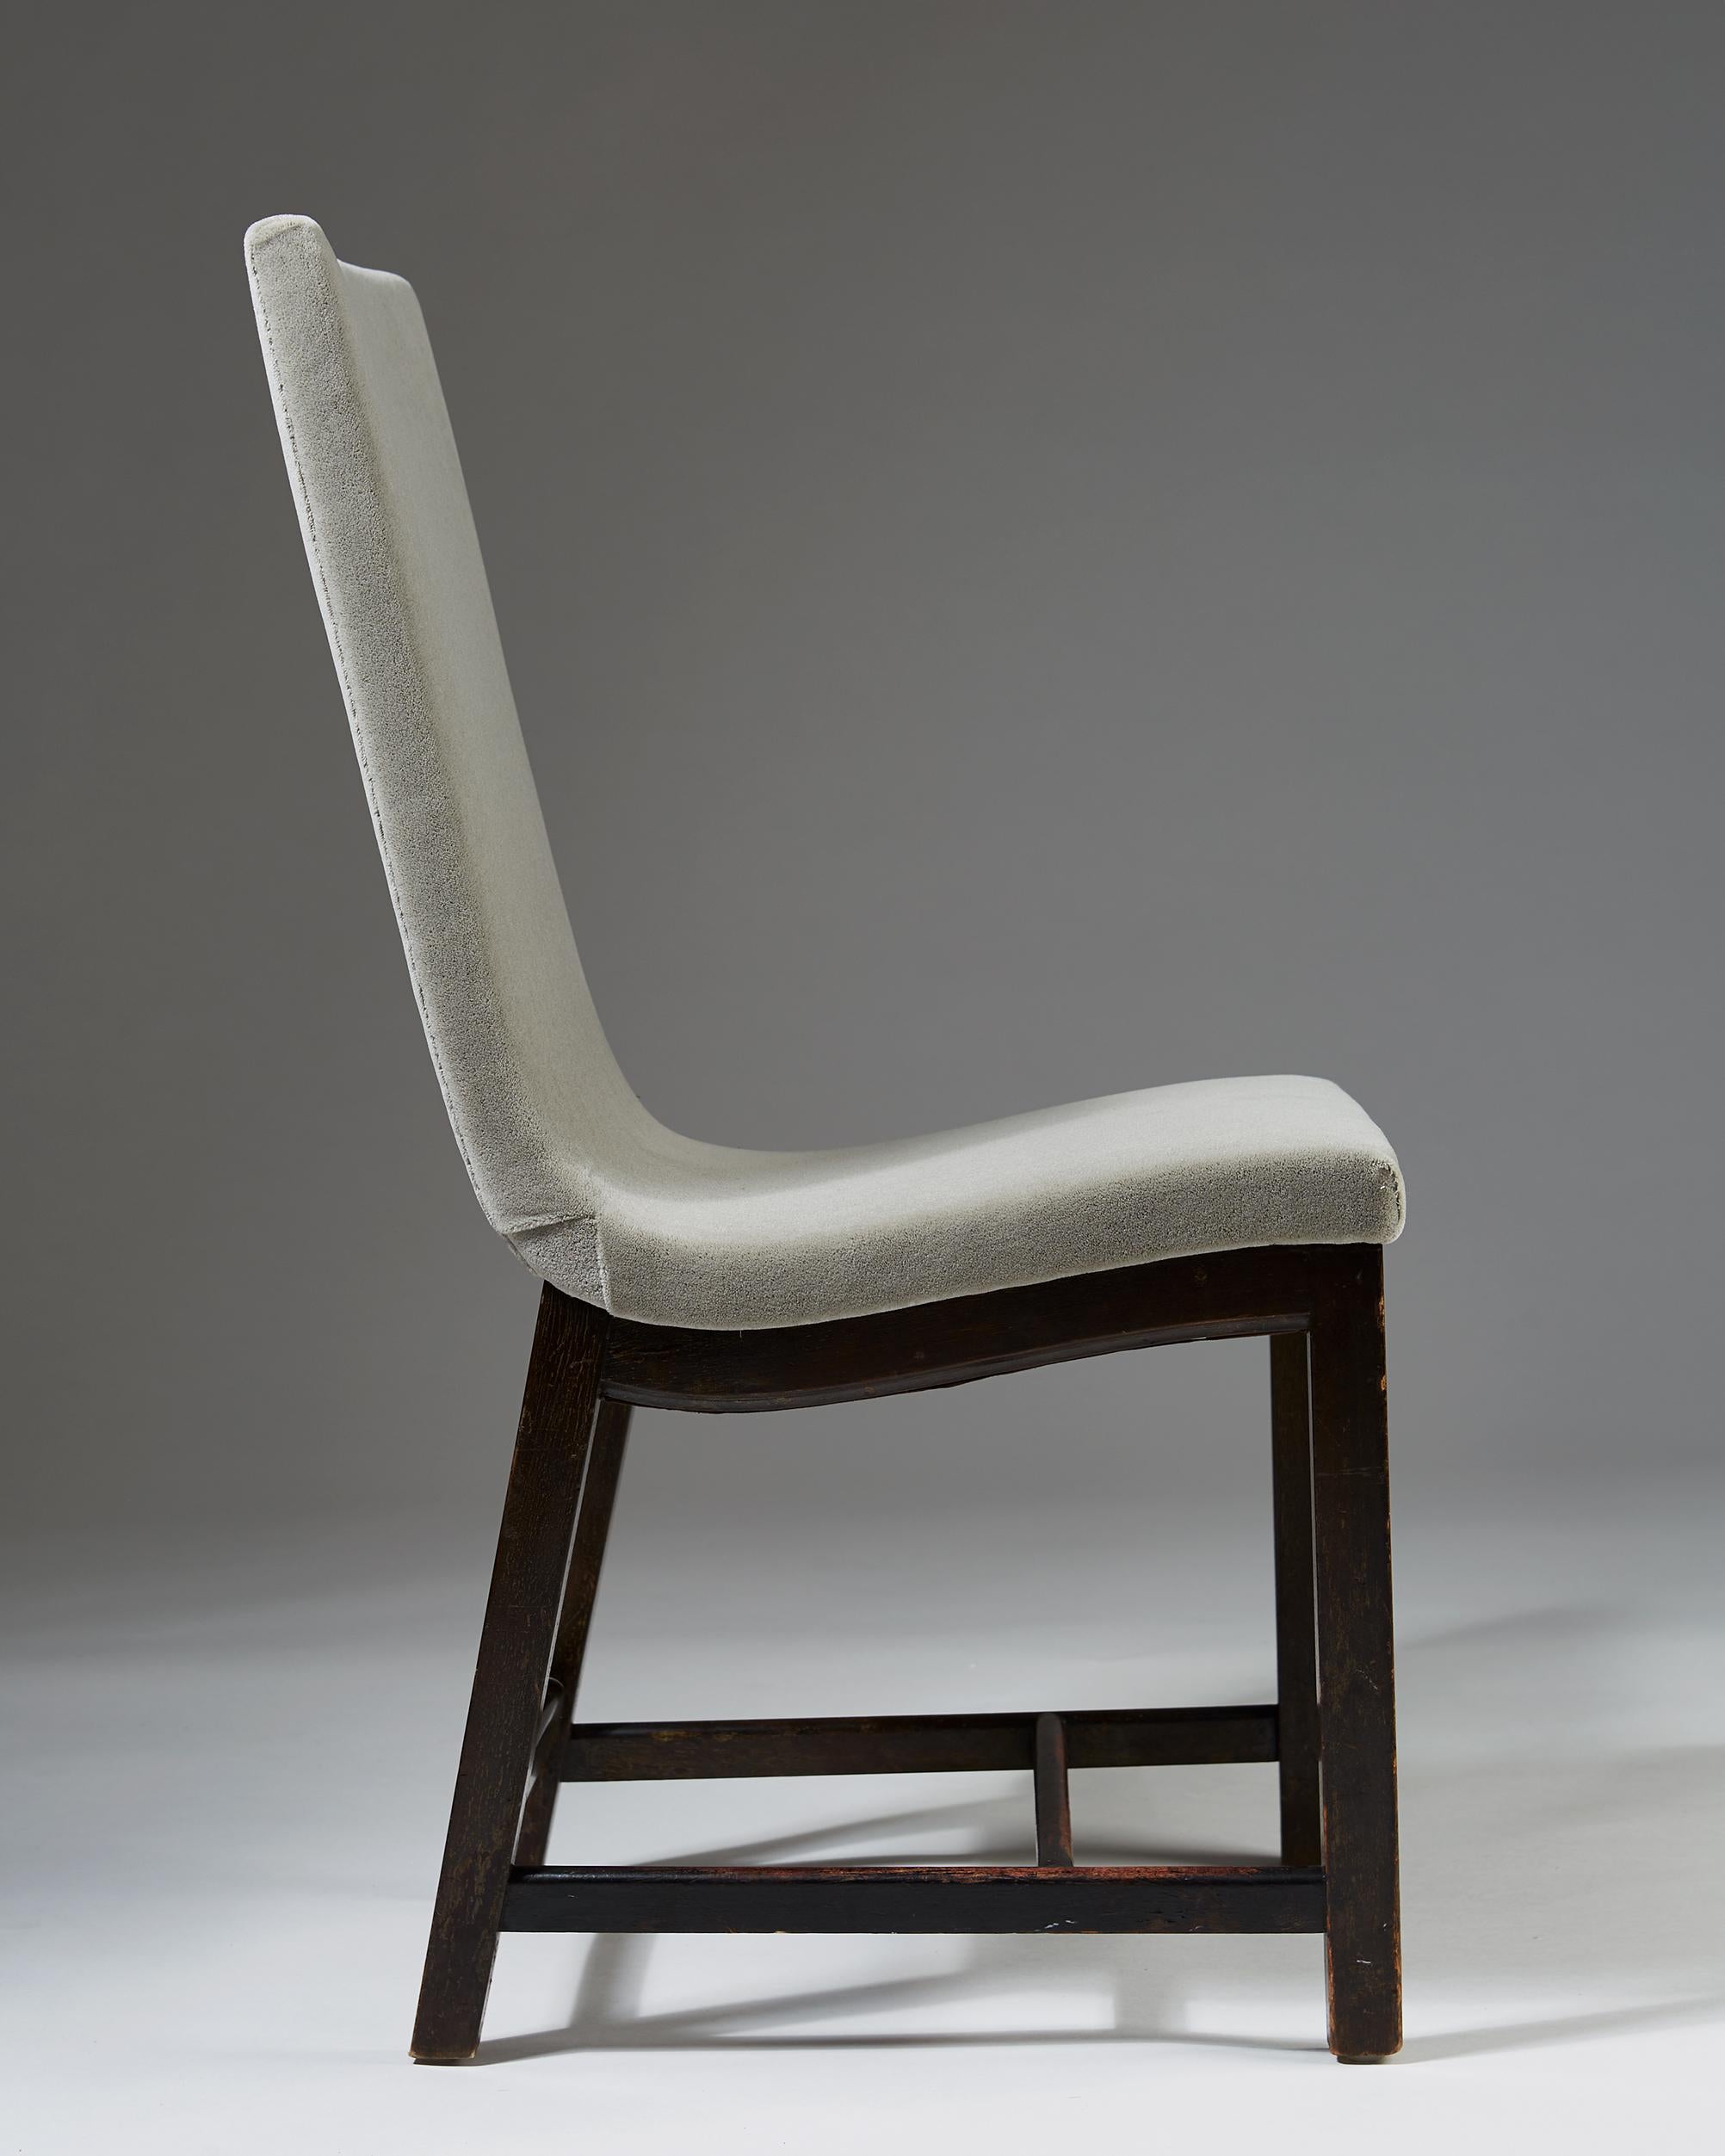 Swedish Set of Three Chairs “Typenko” by Axel Einar Hjorth, Nordiska Kompaniet, Sweden For Sale